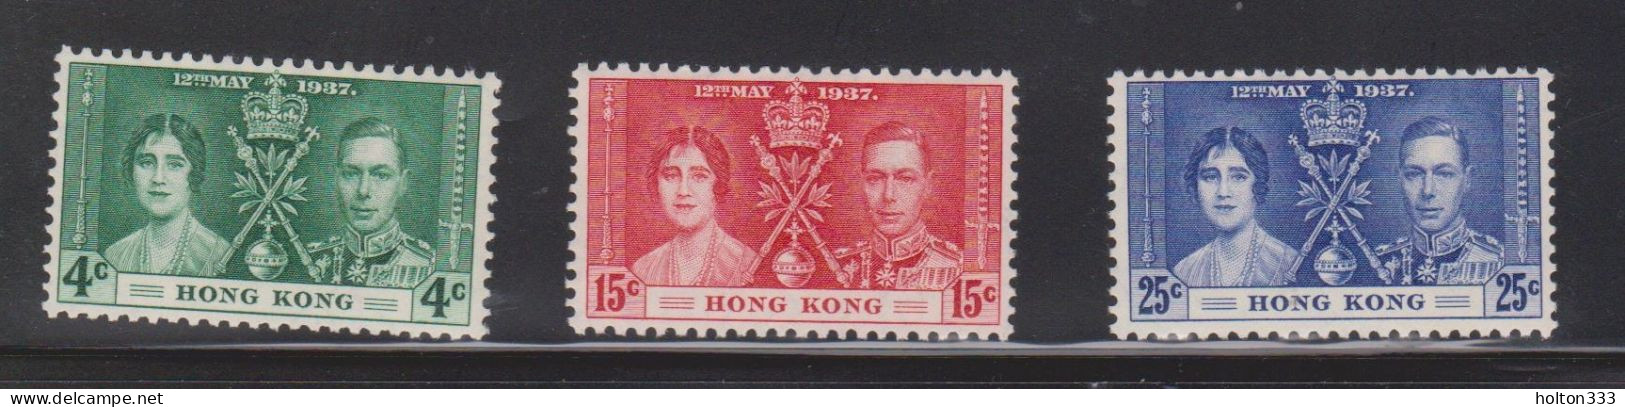 HONG KONG Scott # 151-3 MH - King George VI Coronation Set - Ongebruikt